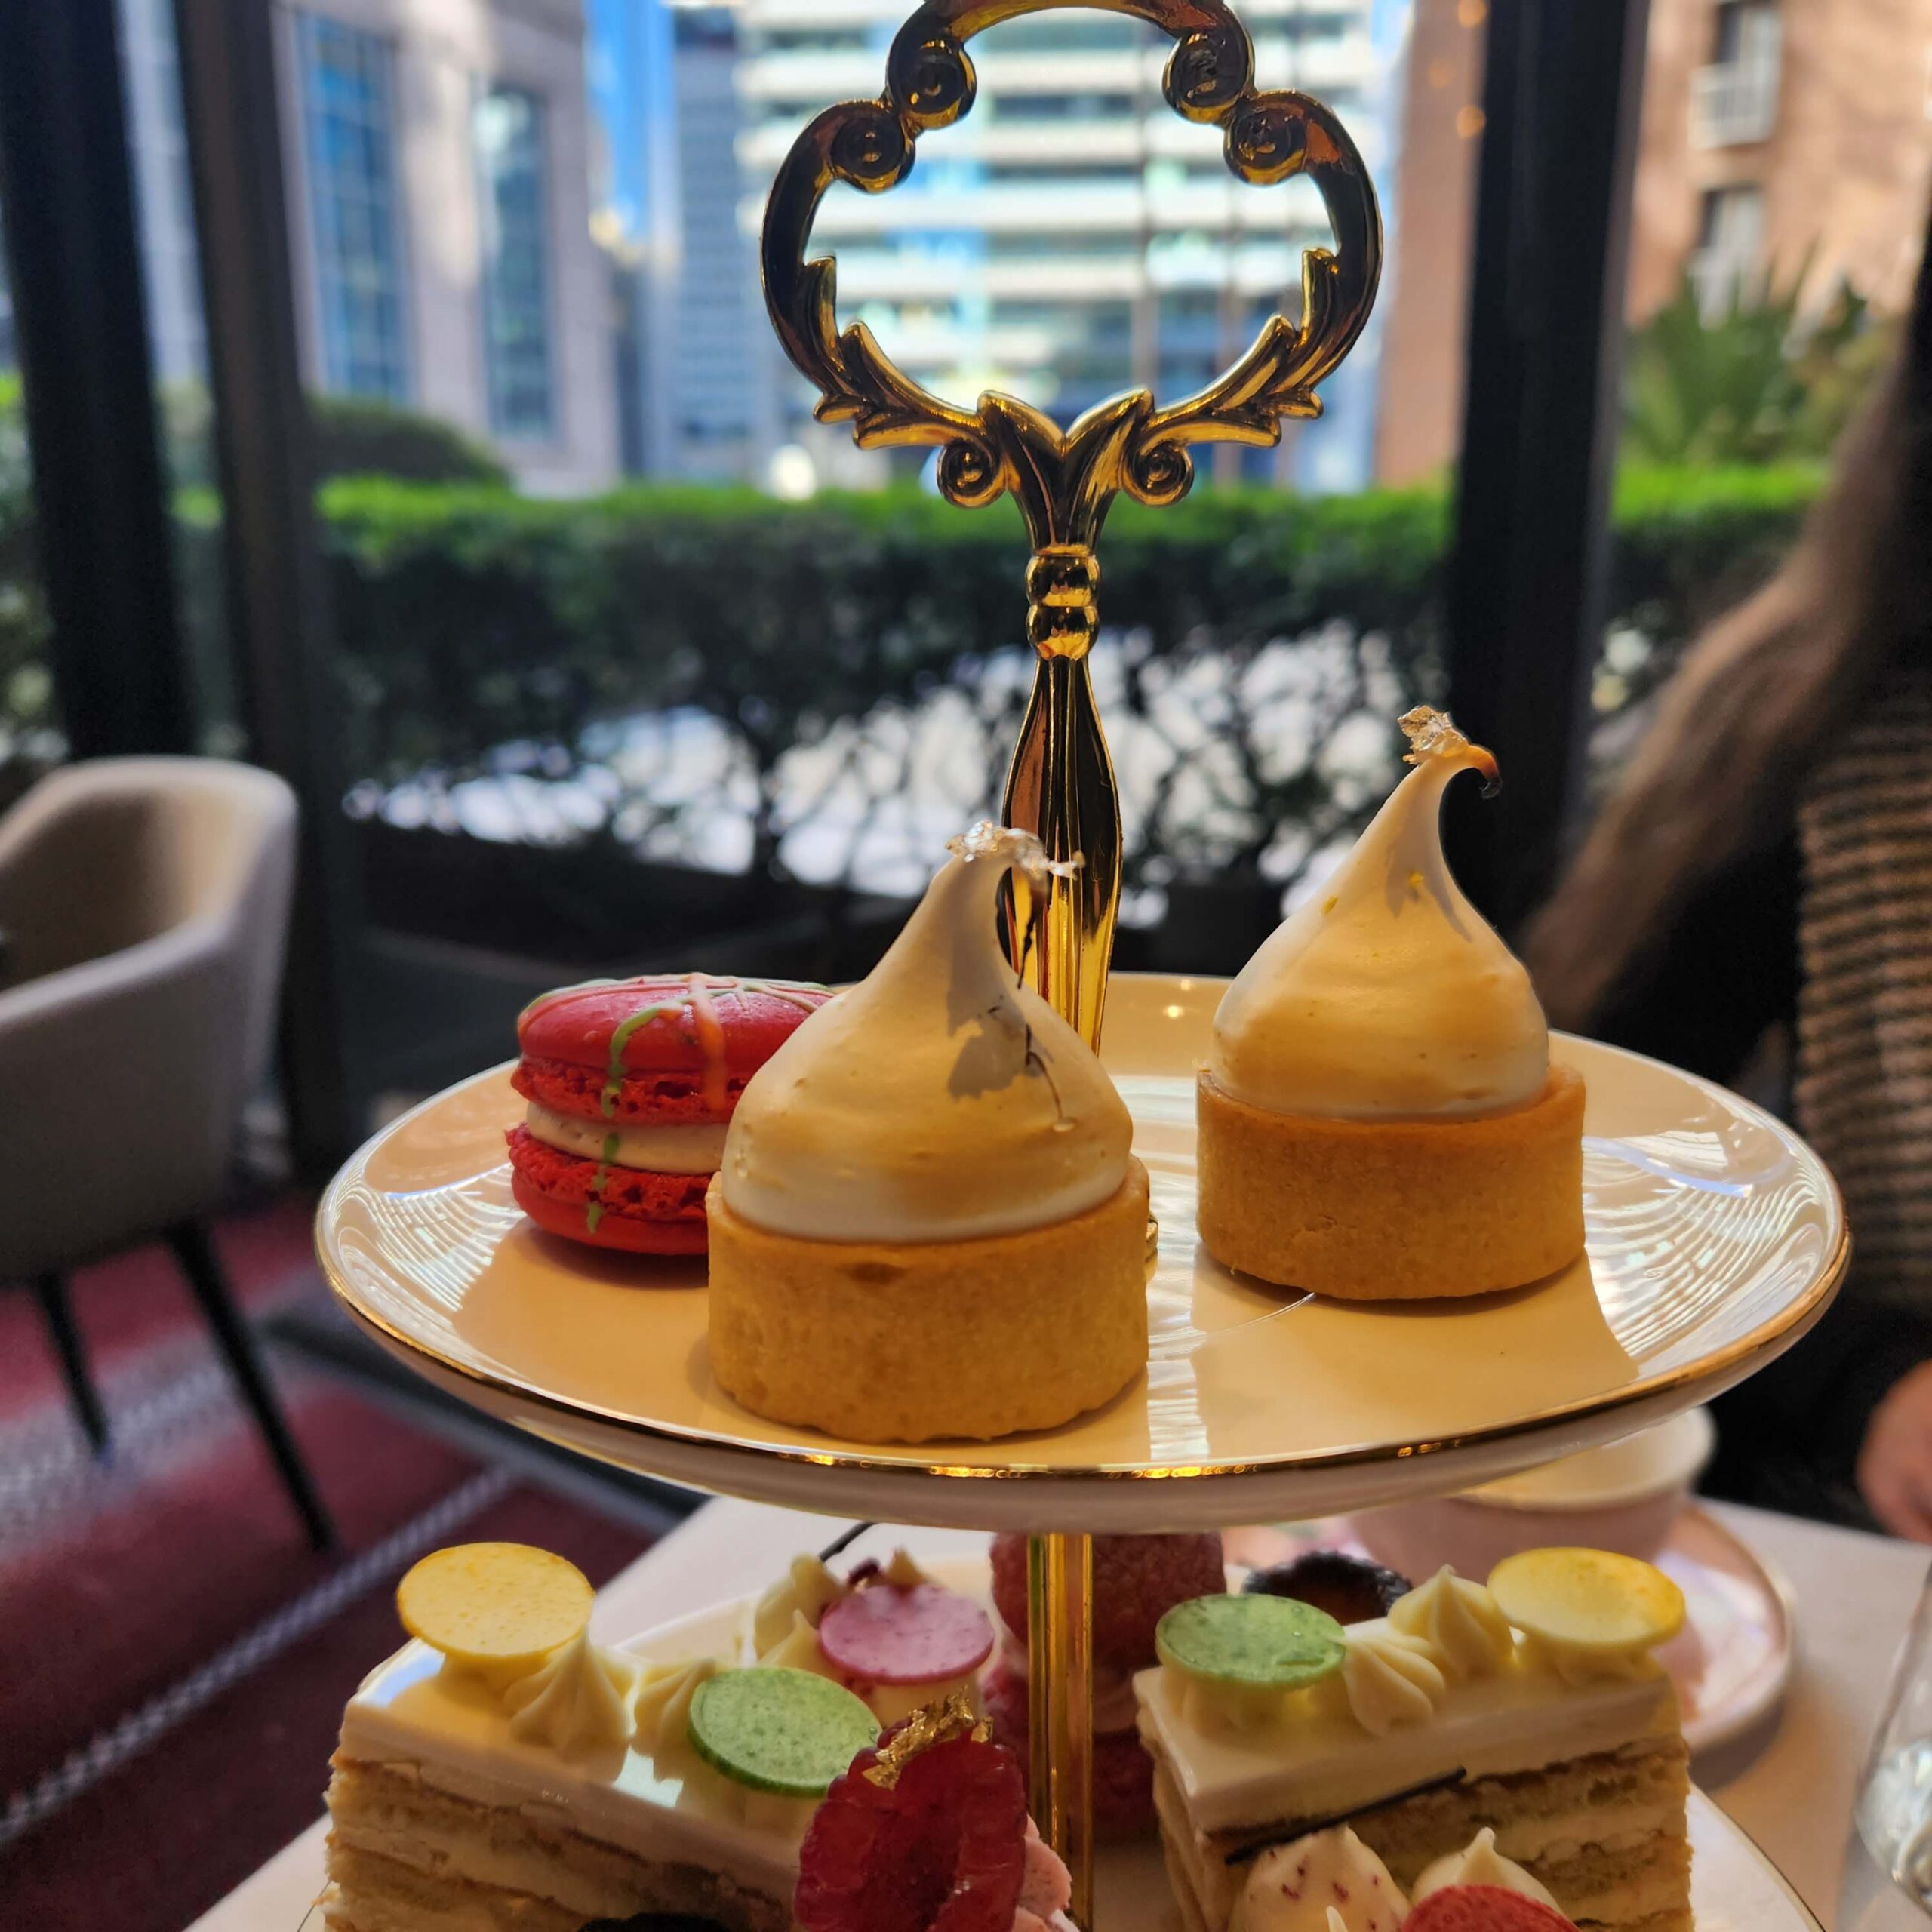 Sofitel Sydney Wentworth’s Archibald High Tea desserts